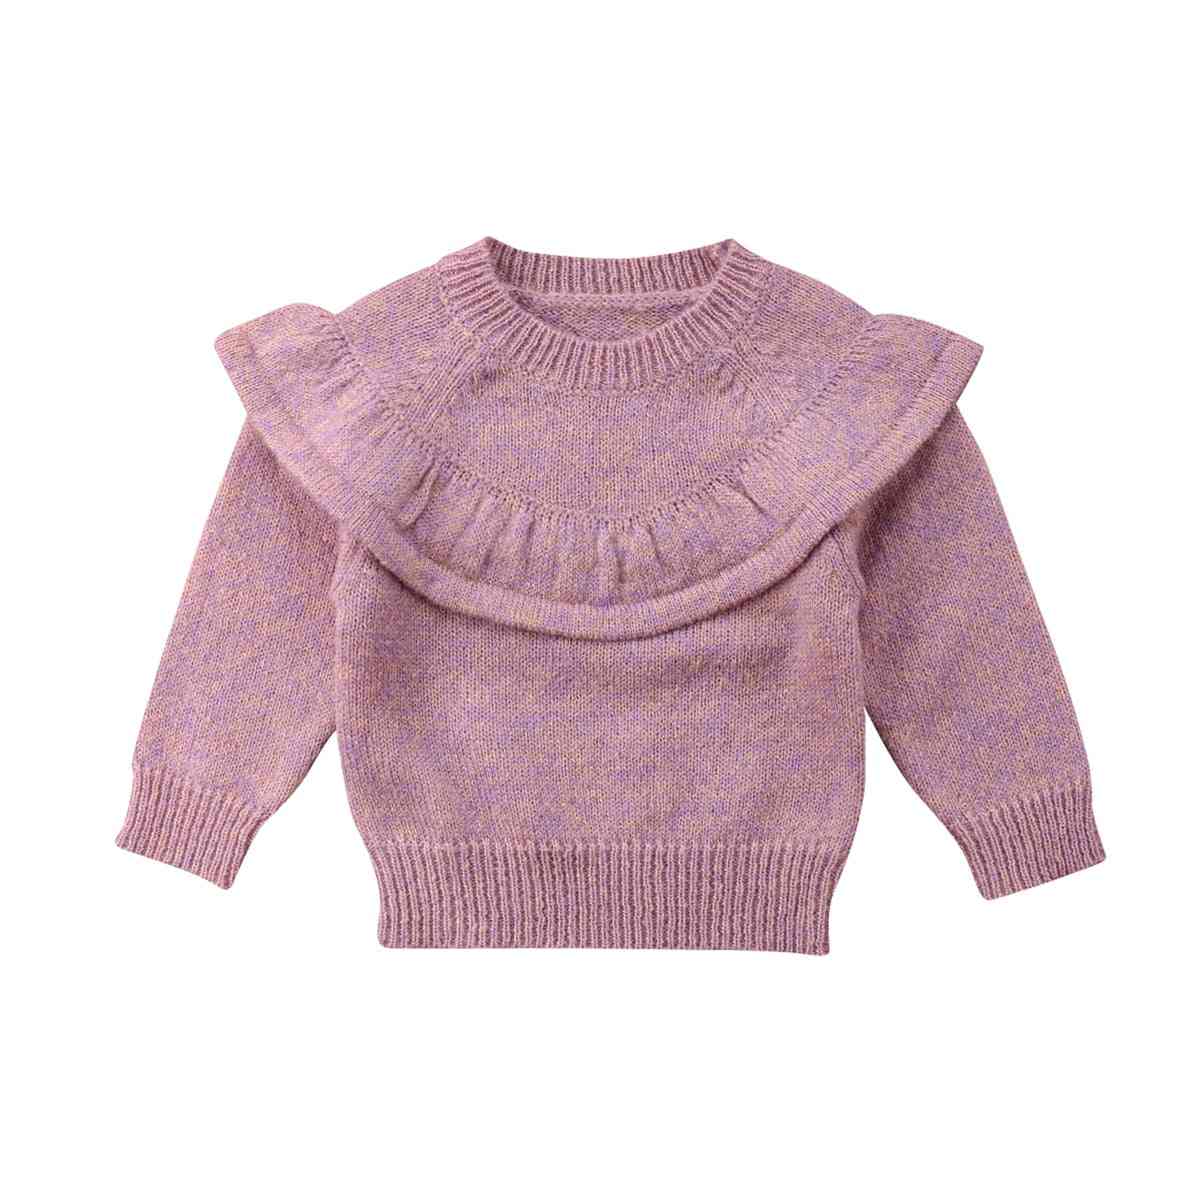 Autumn Winter Newborn Baby Girl Tops Ruffle Knitted Warm Sweater